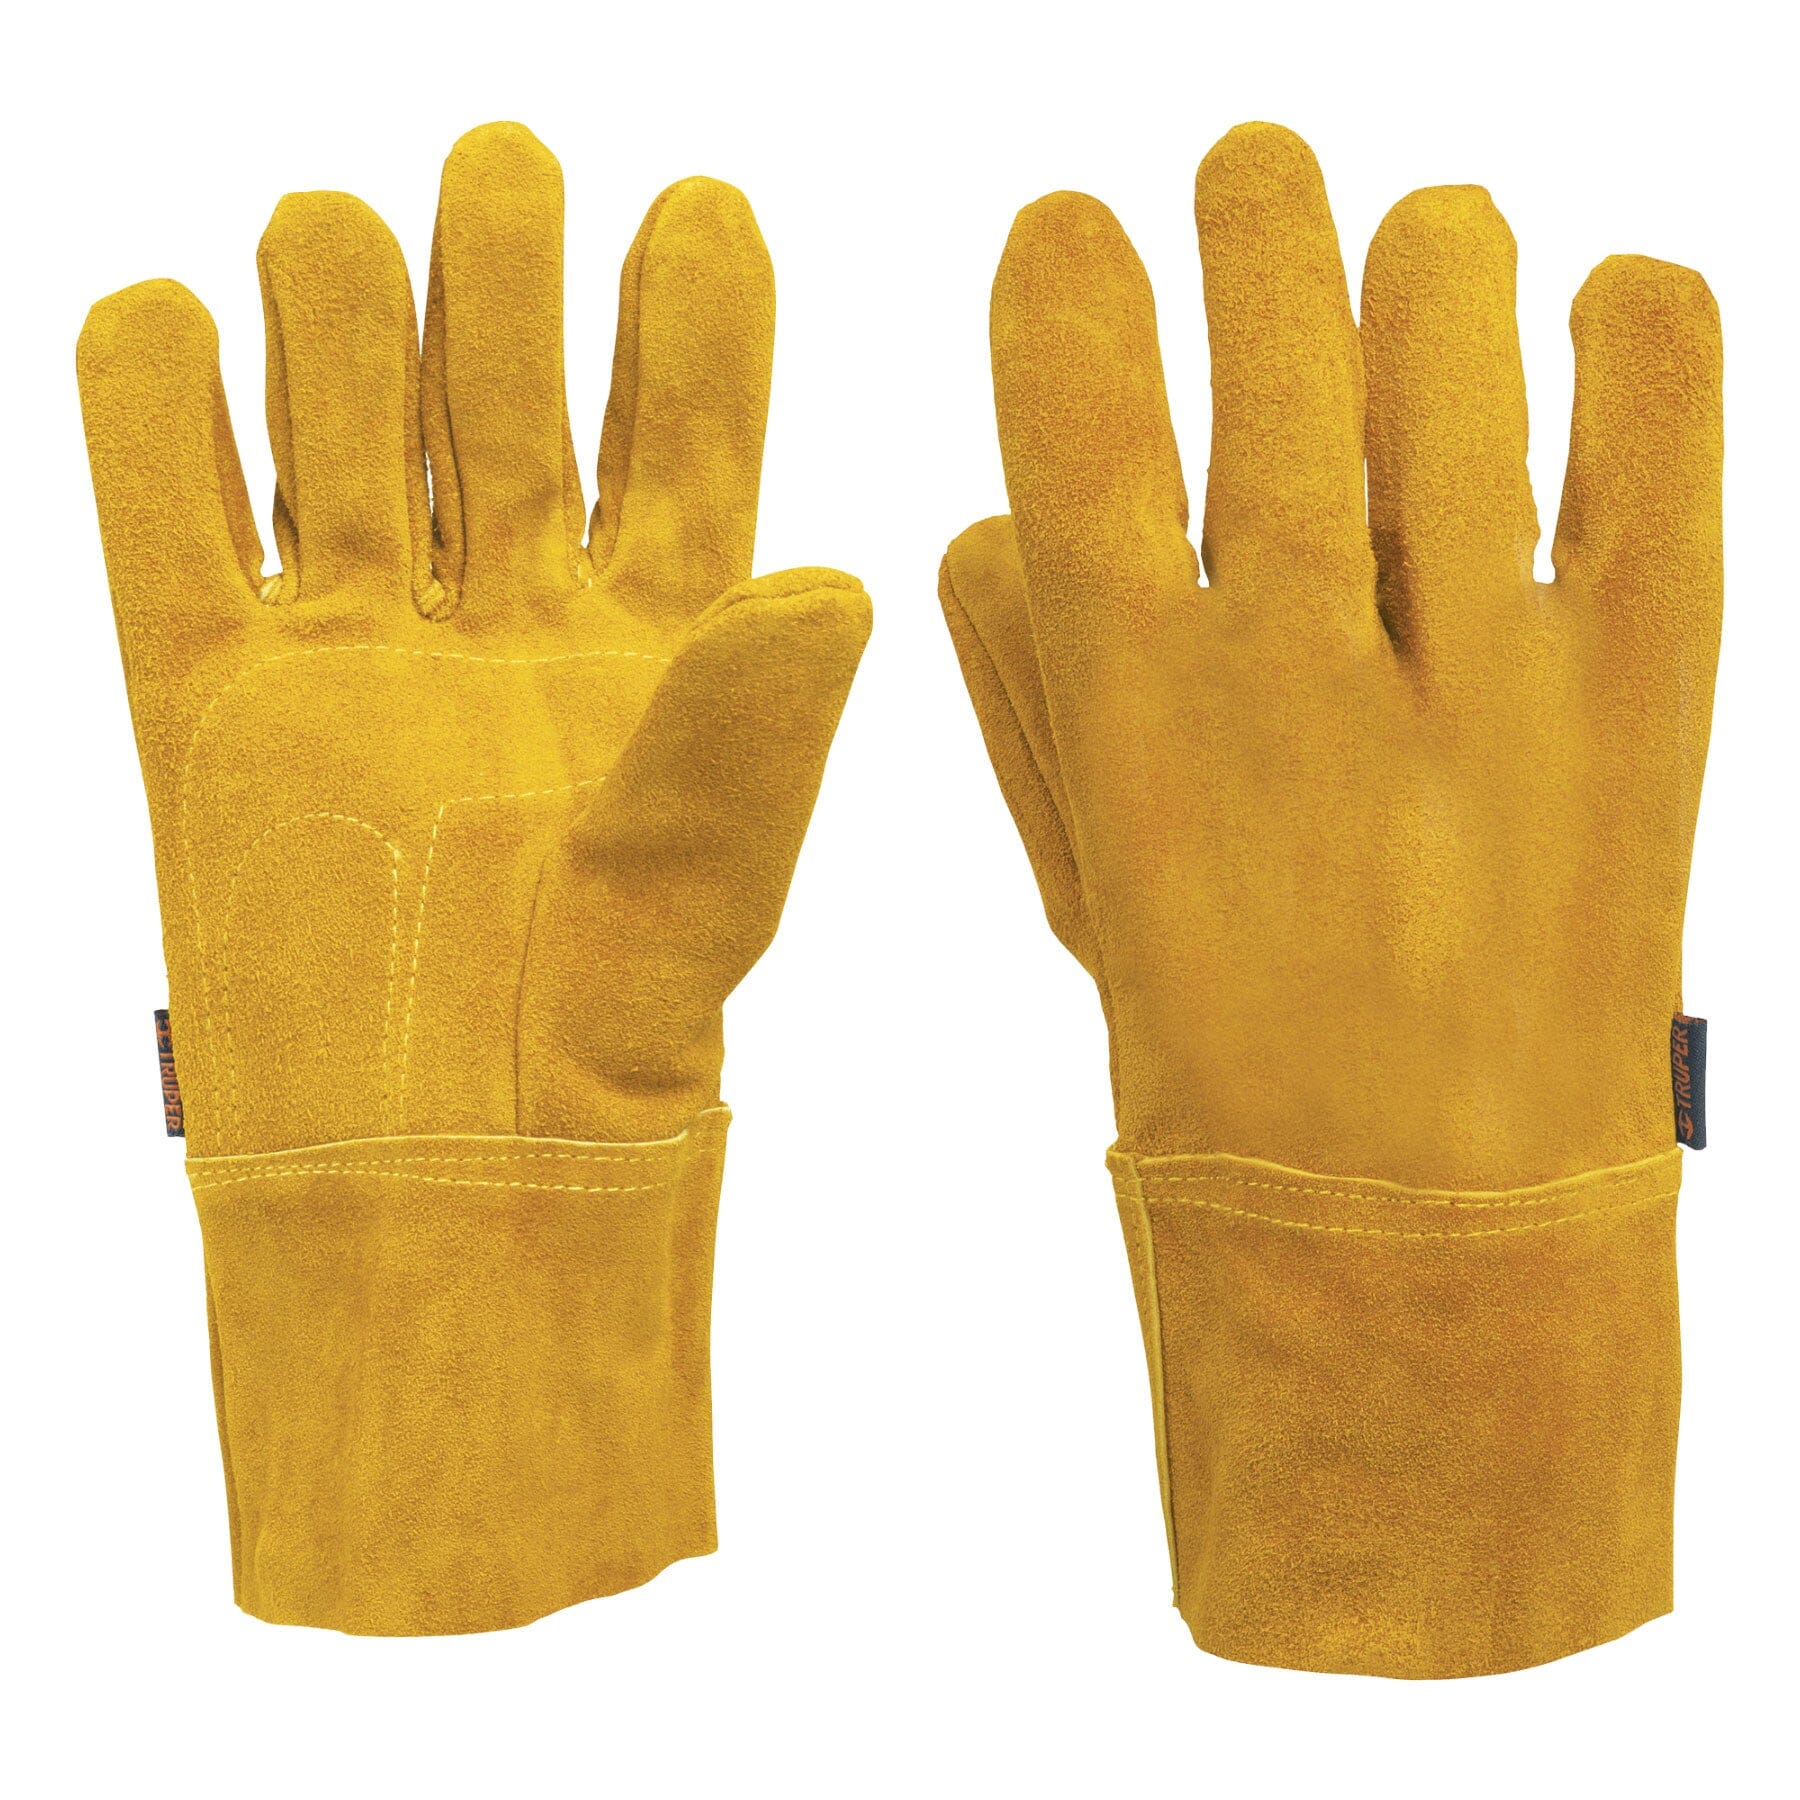 Truper Leather Welding Gloves -